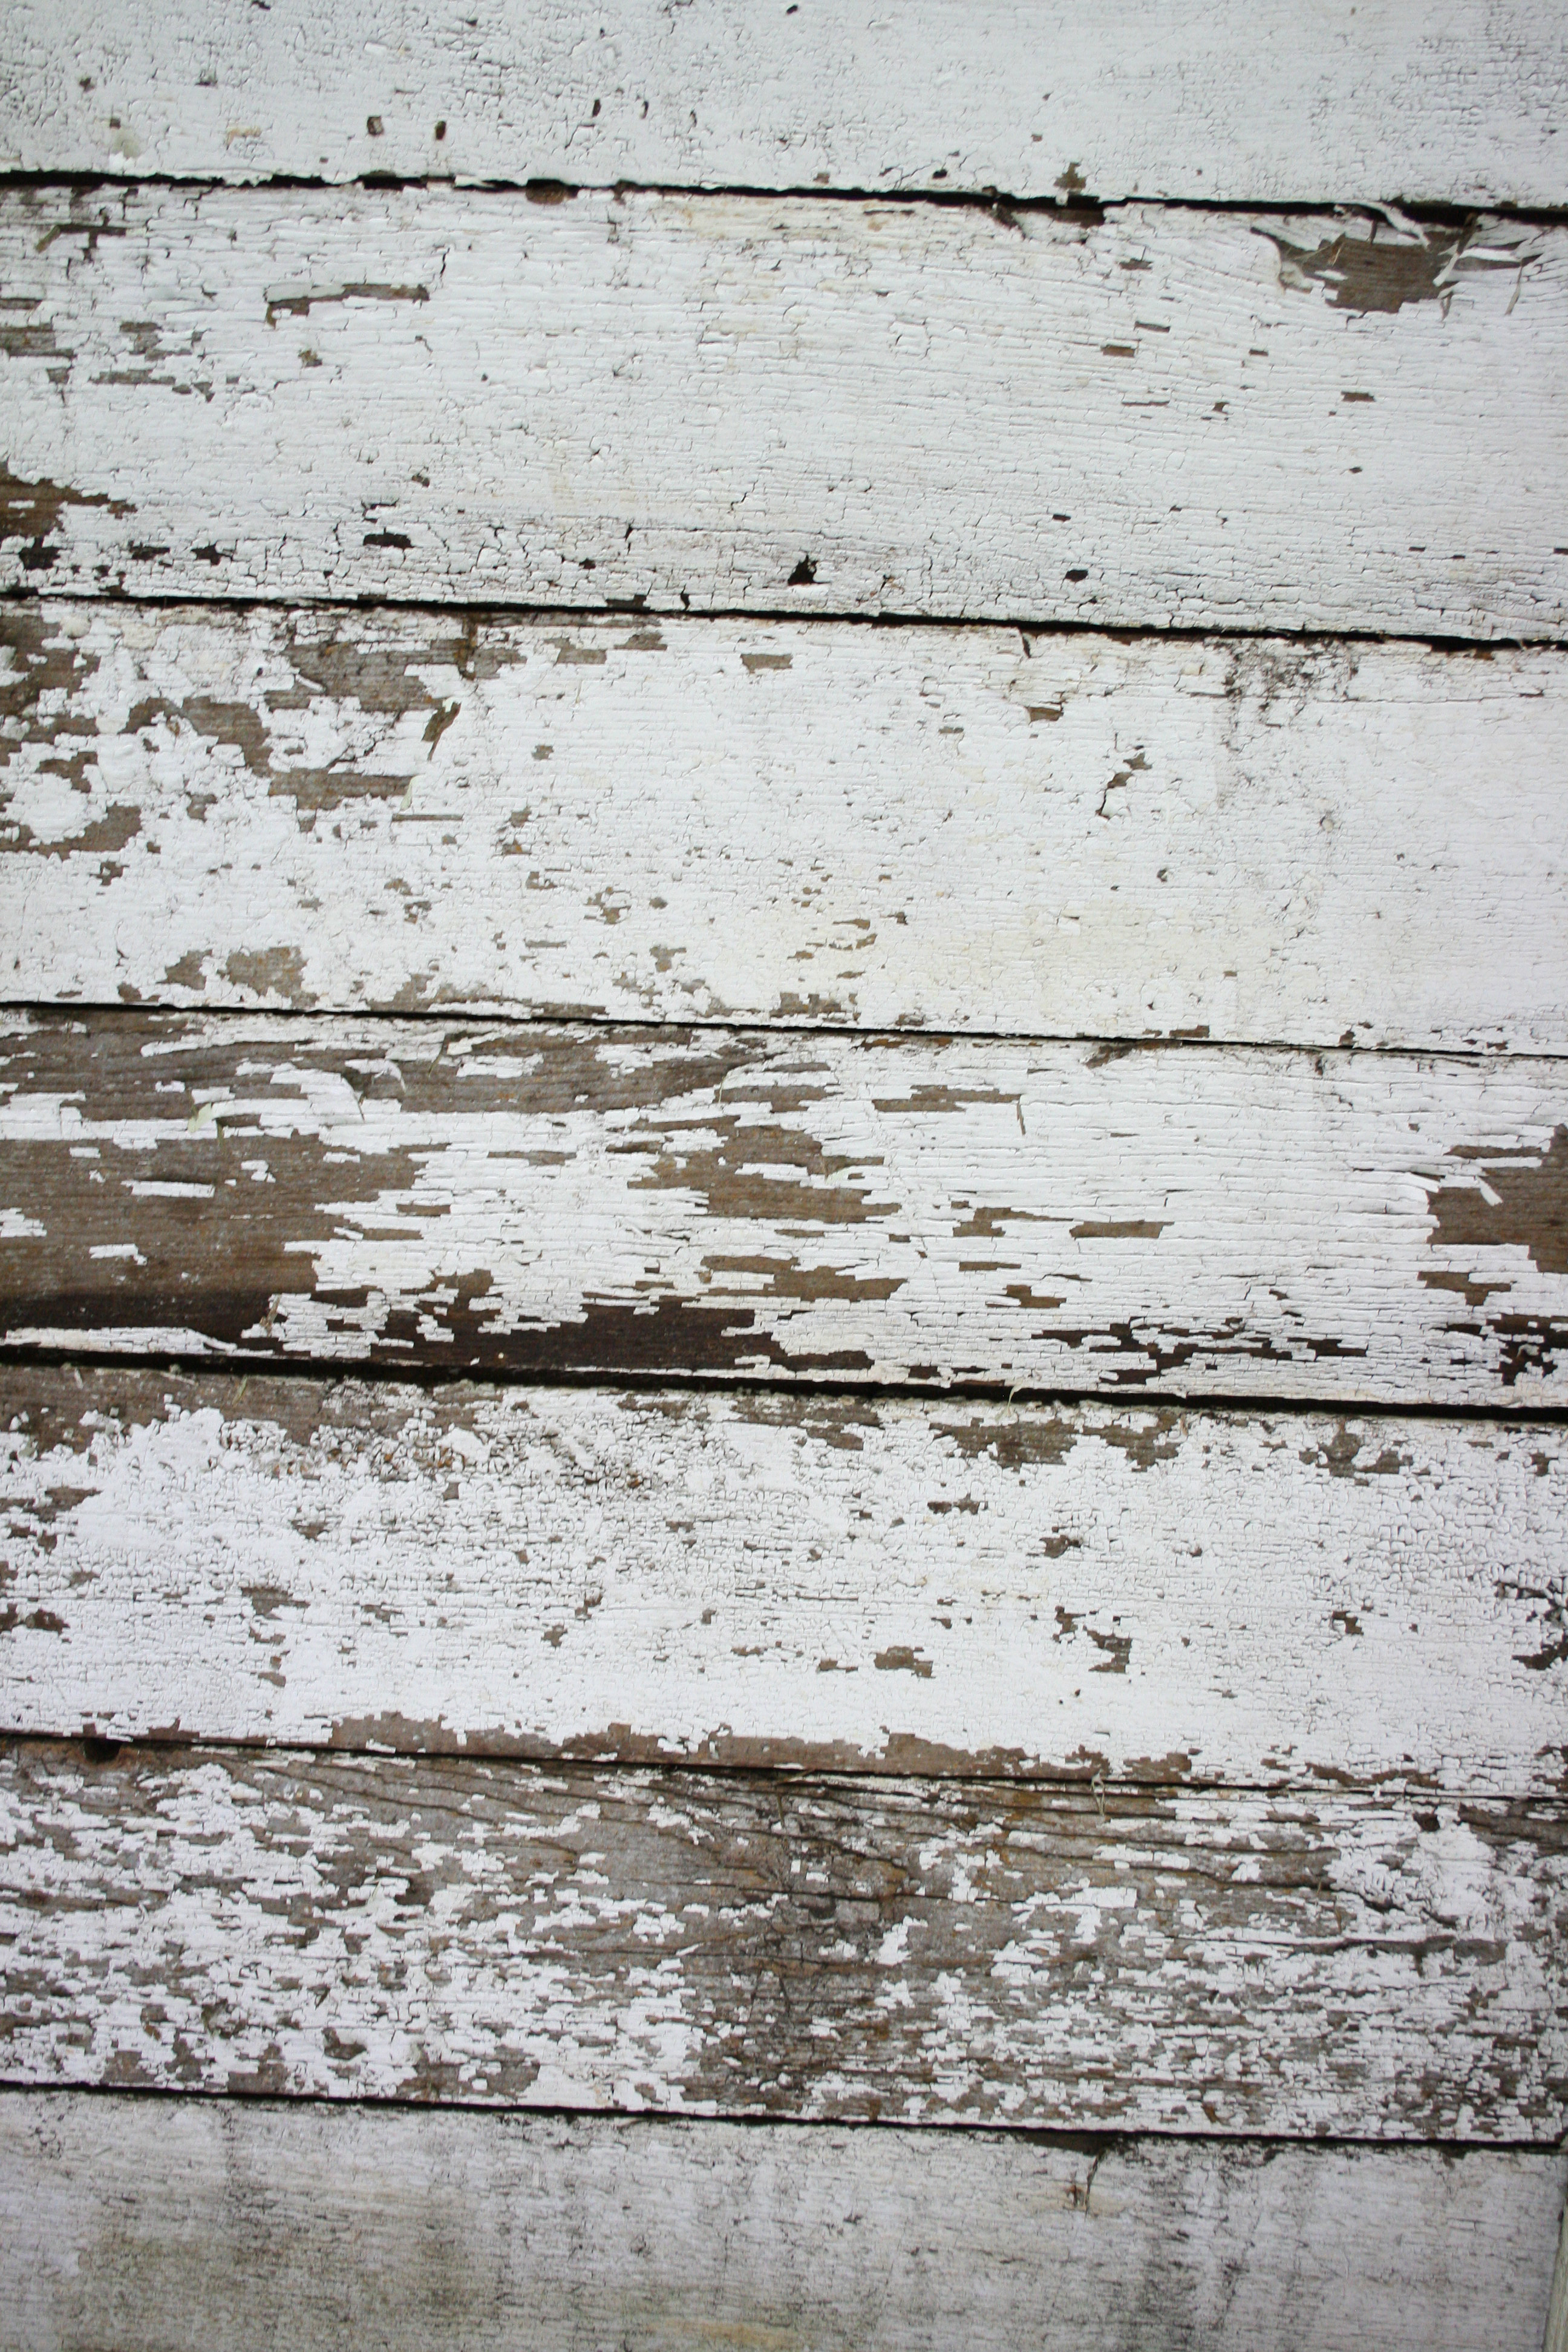 Old wood texture photo